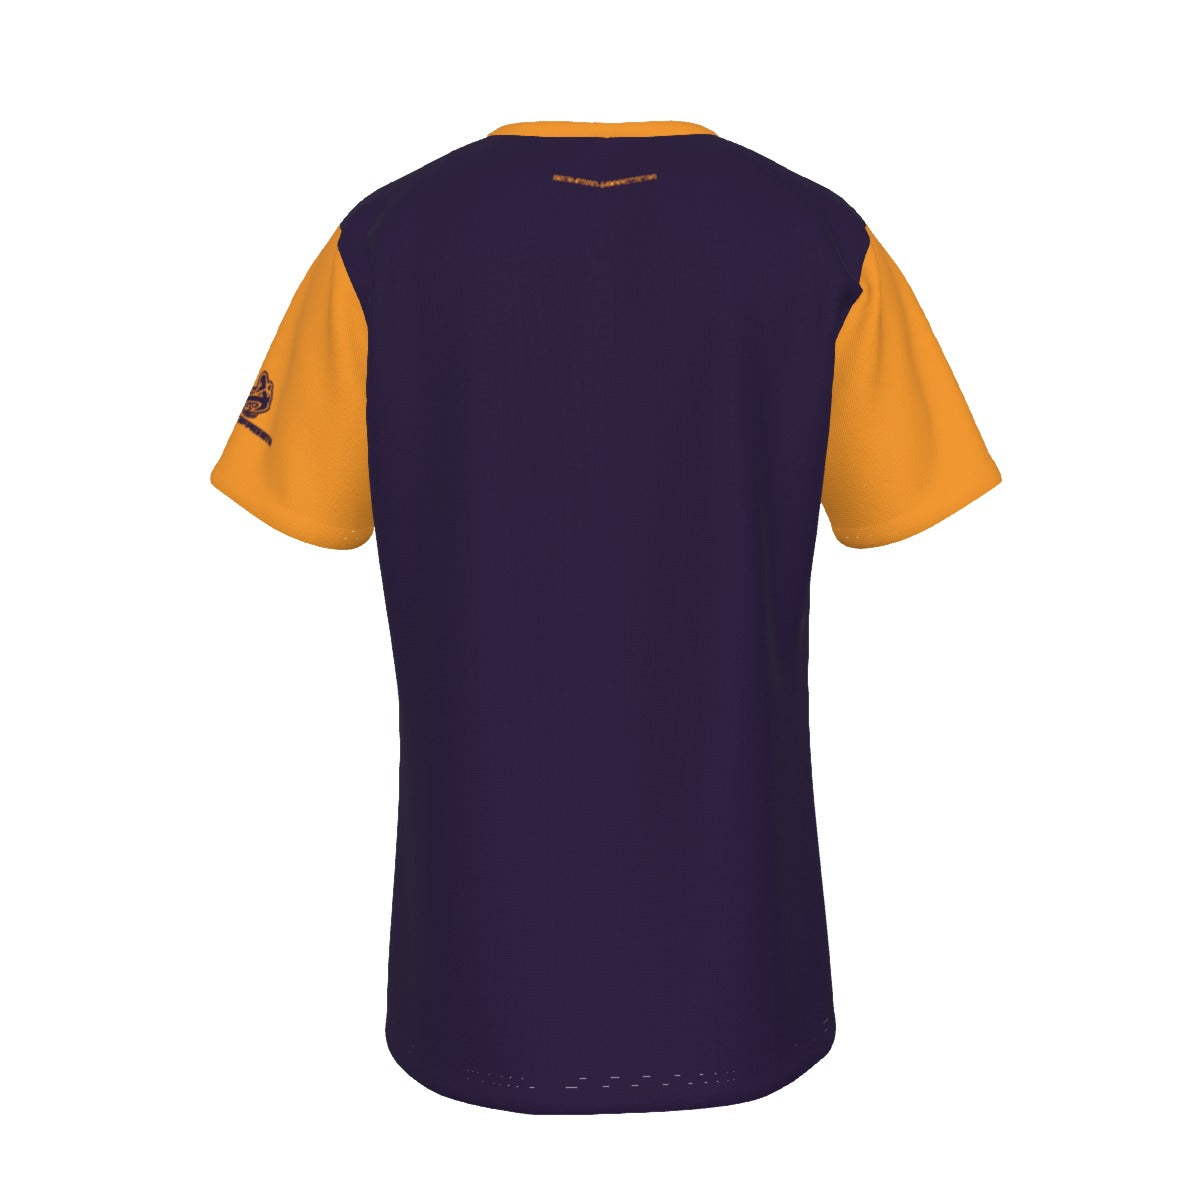 
                  
                    A.A. The 6th Man Purple Yellow Men's Short Sleeve T-Shirt
                  
                